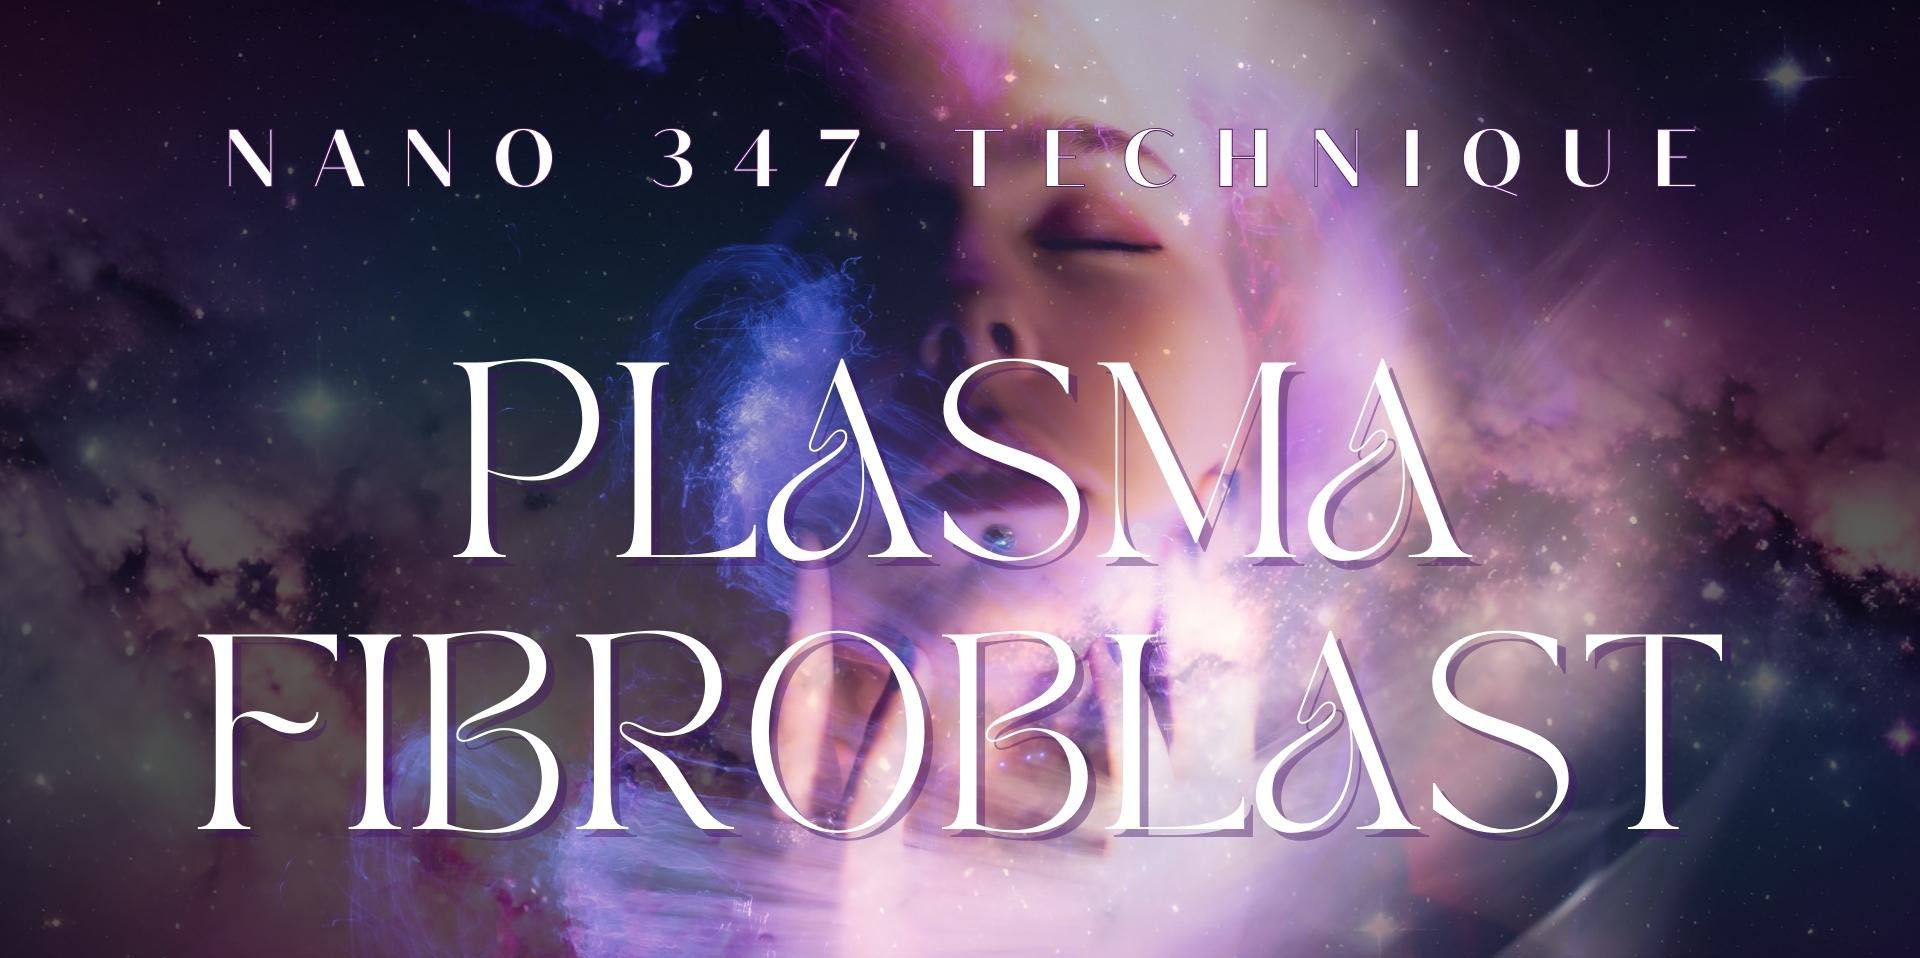 Khoá học Plasma Fibroblast Nano 347 - kỹ thuật Plasma chuẩn nhất